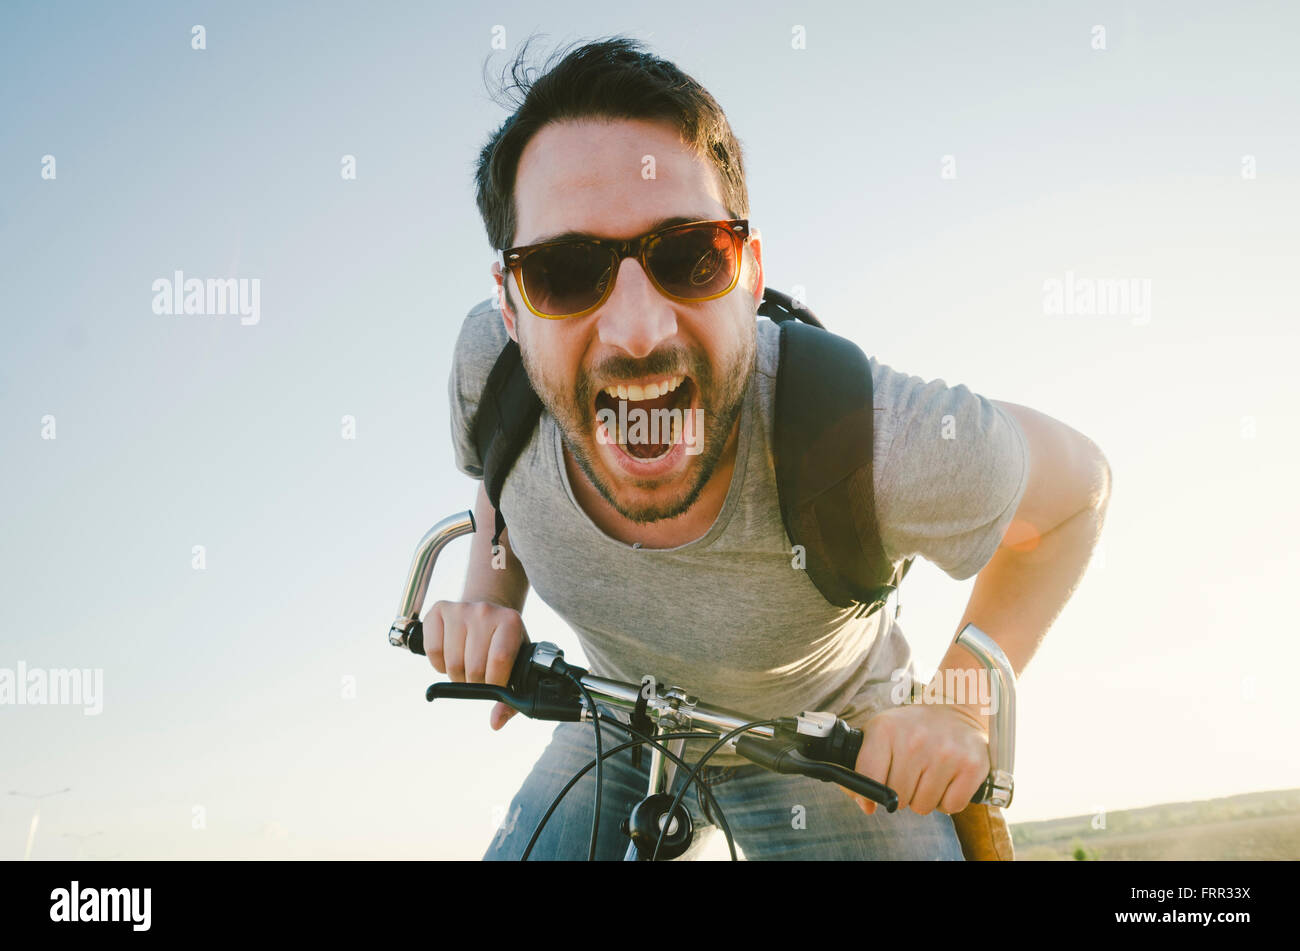 Mann mit dem Fahrrad Spaß. Retro-Stil Bild. Stockfoto